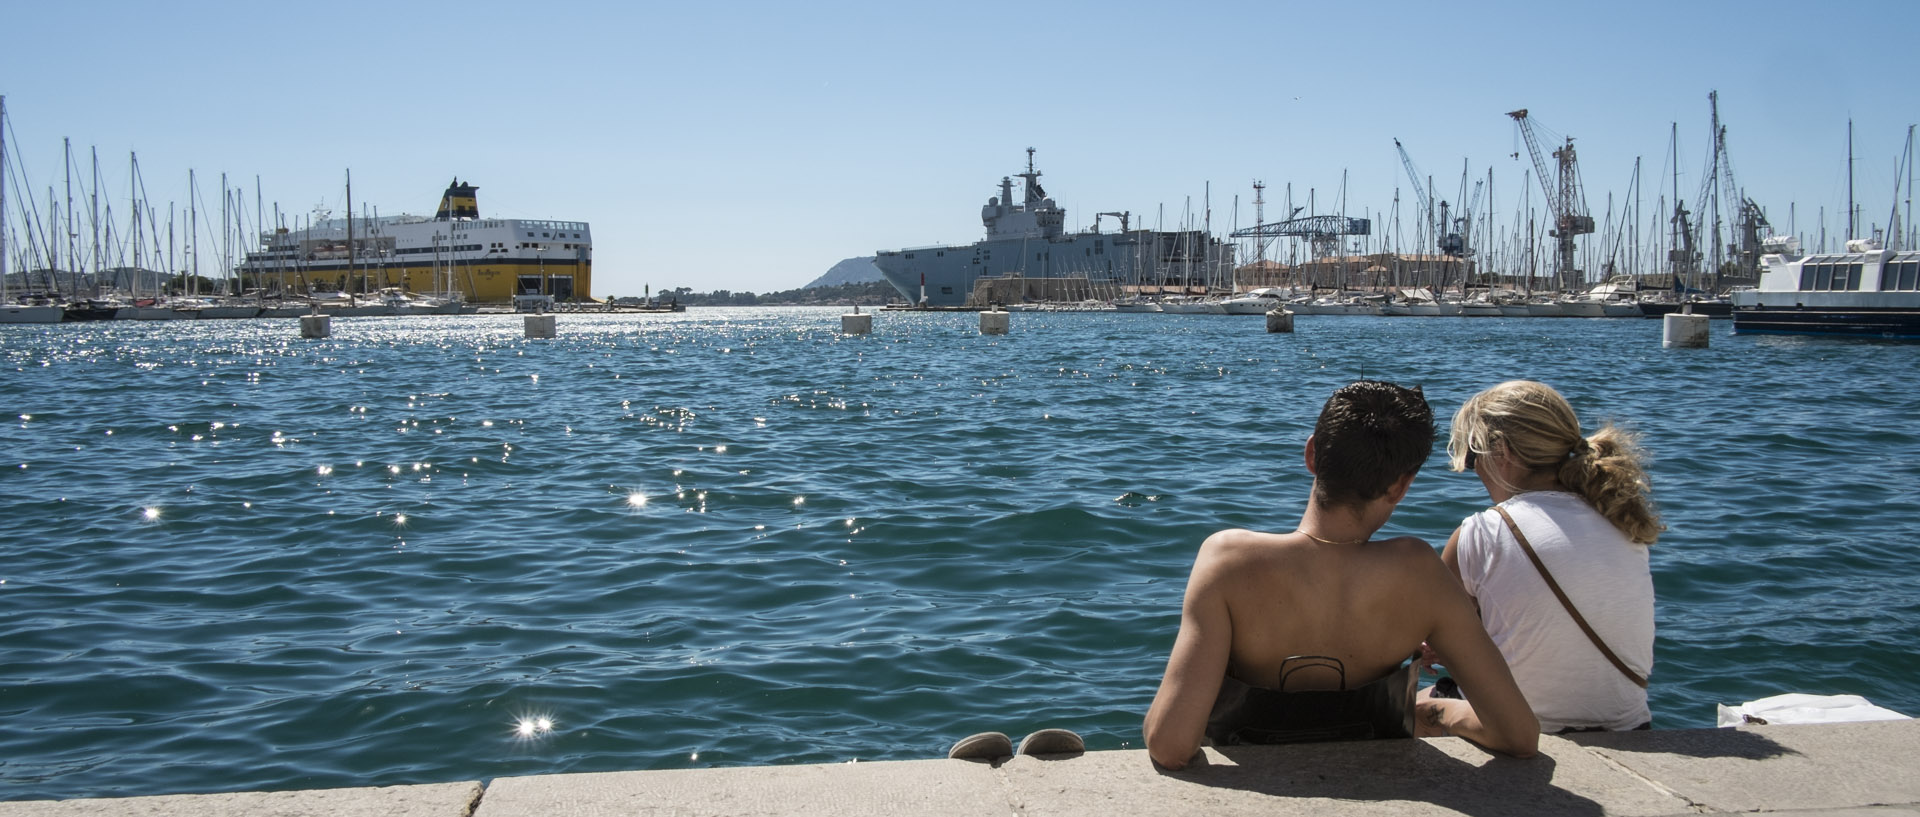 Mercredi 27 août 2014, 14:33, quai Cronstadt, Toulon